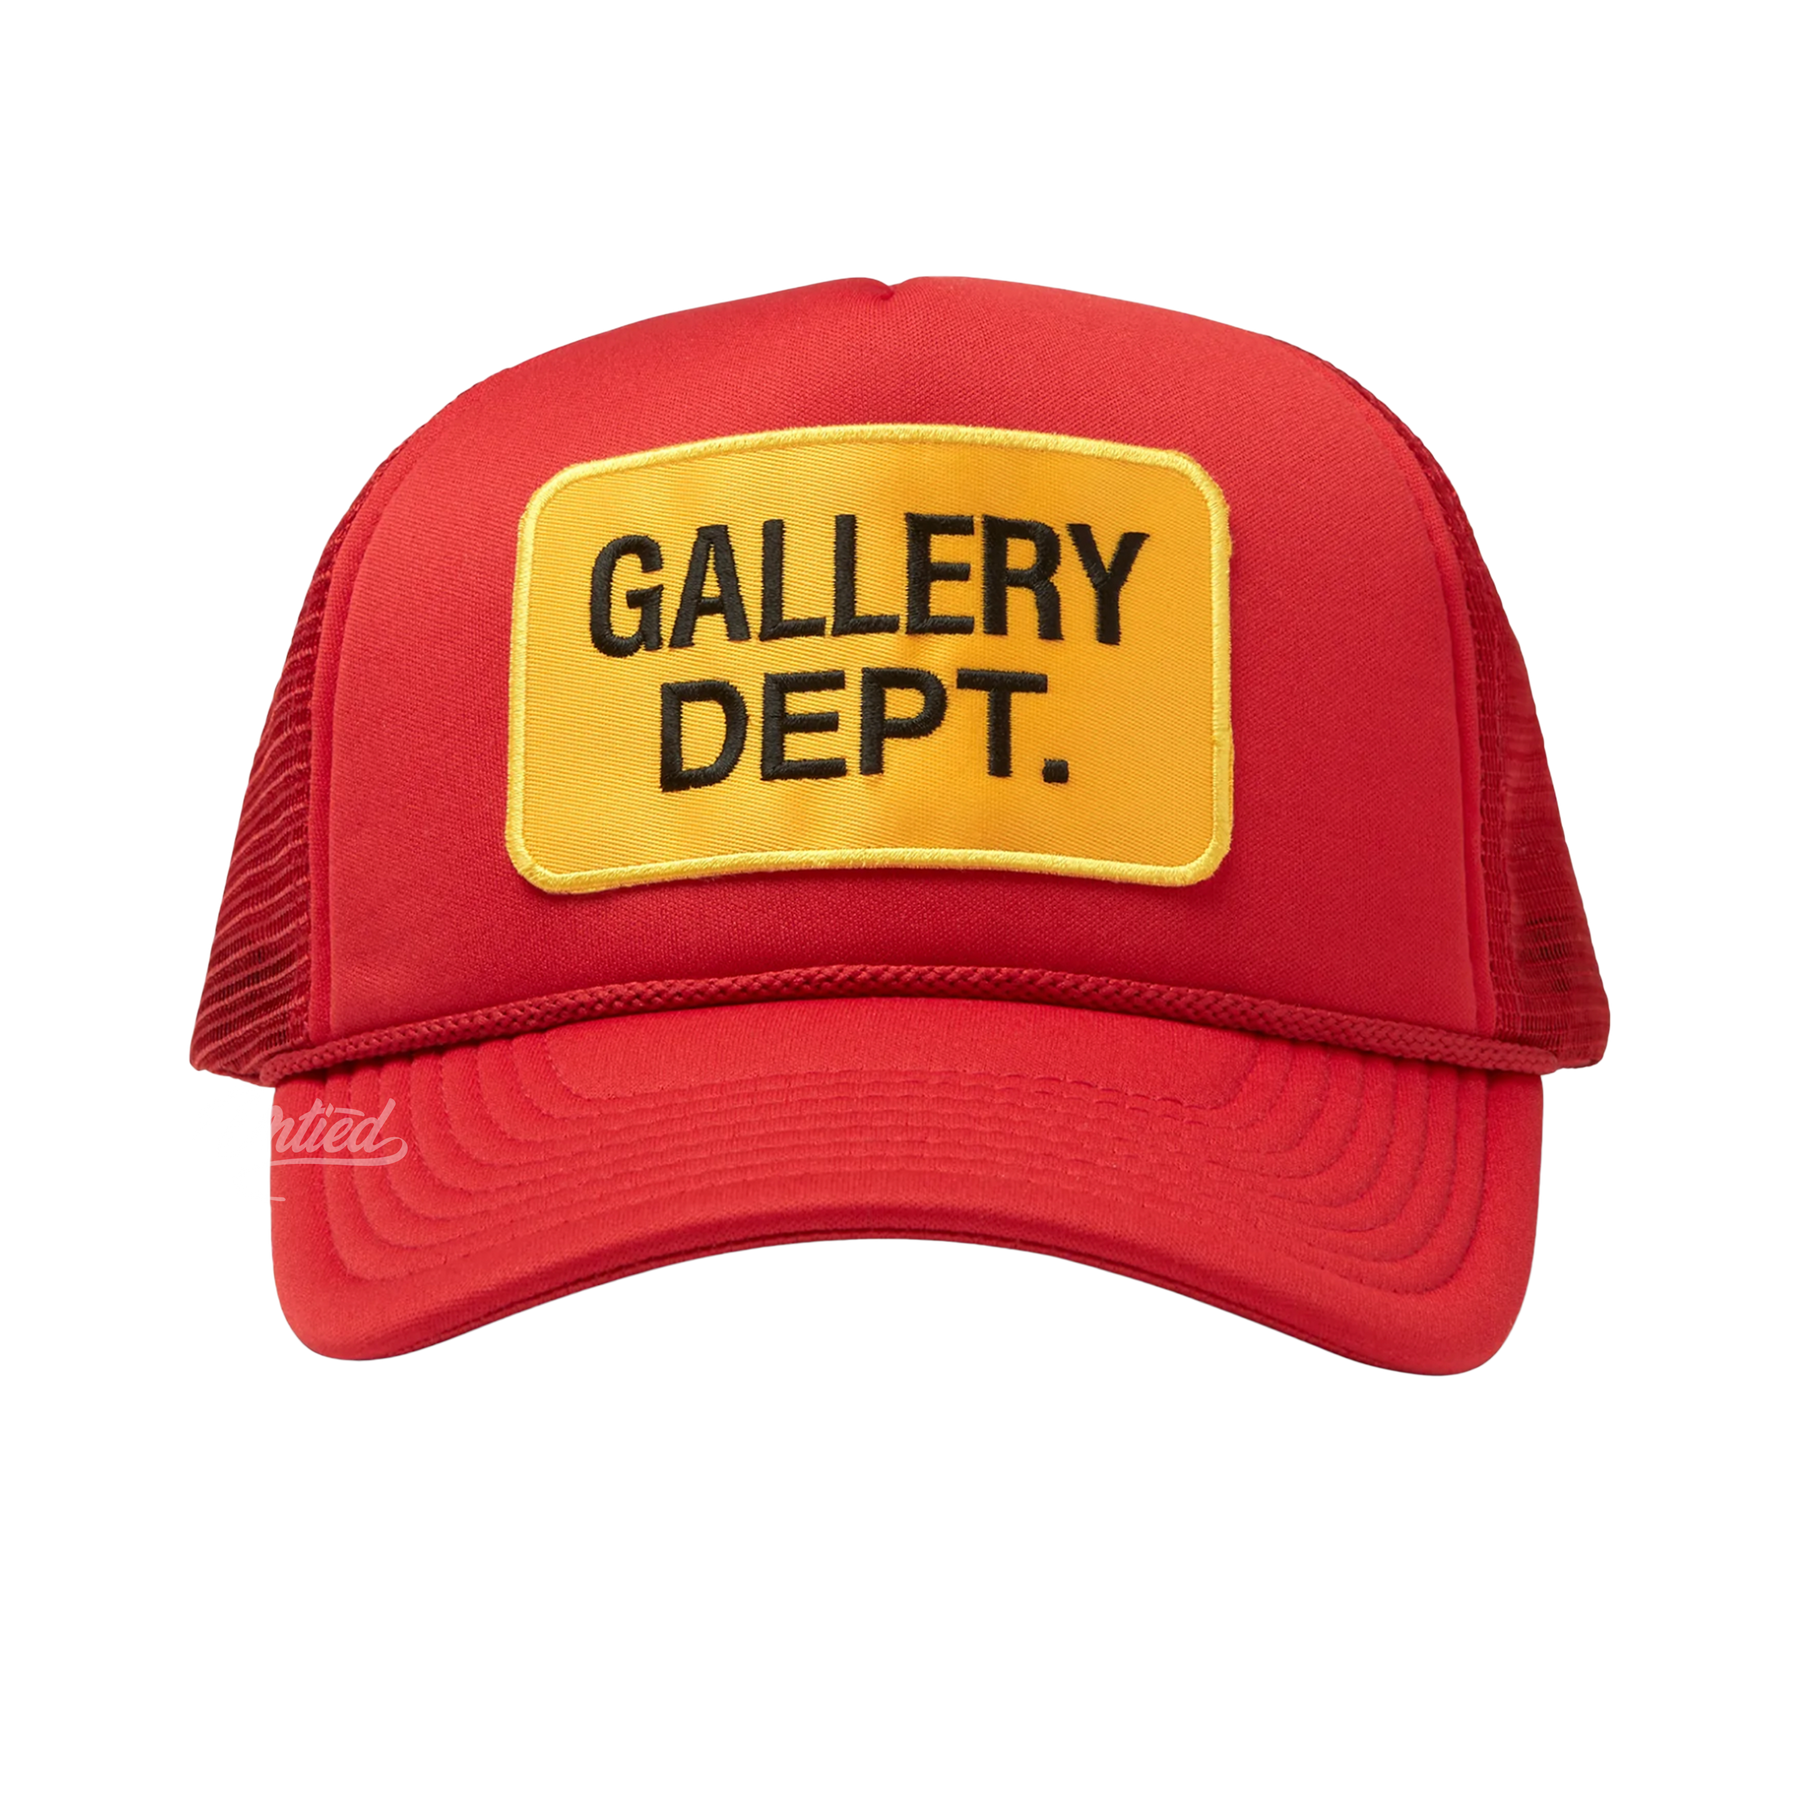 Gallery Dept. Souvenir Trucker Hat "Red"